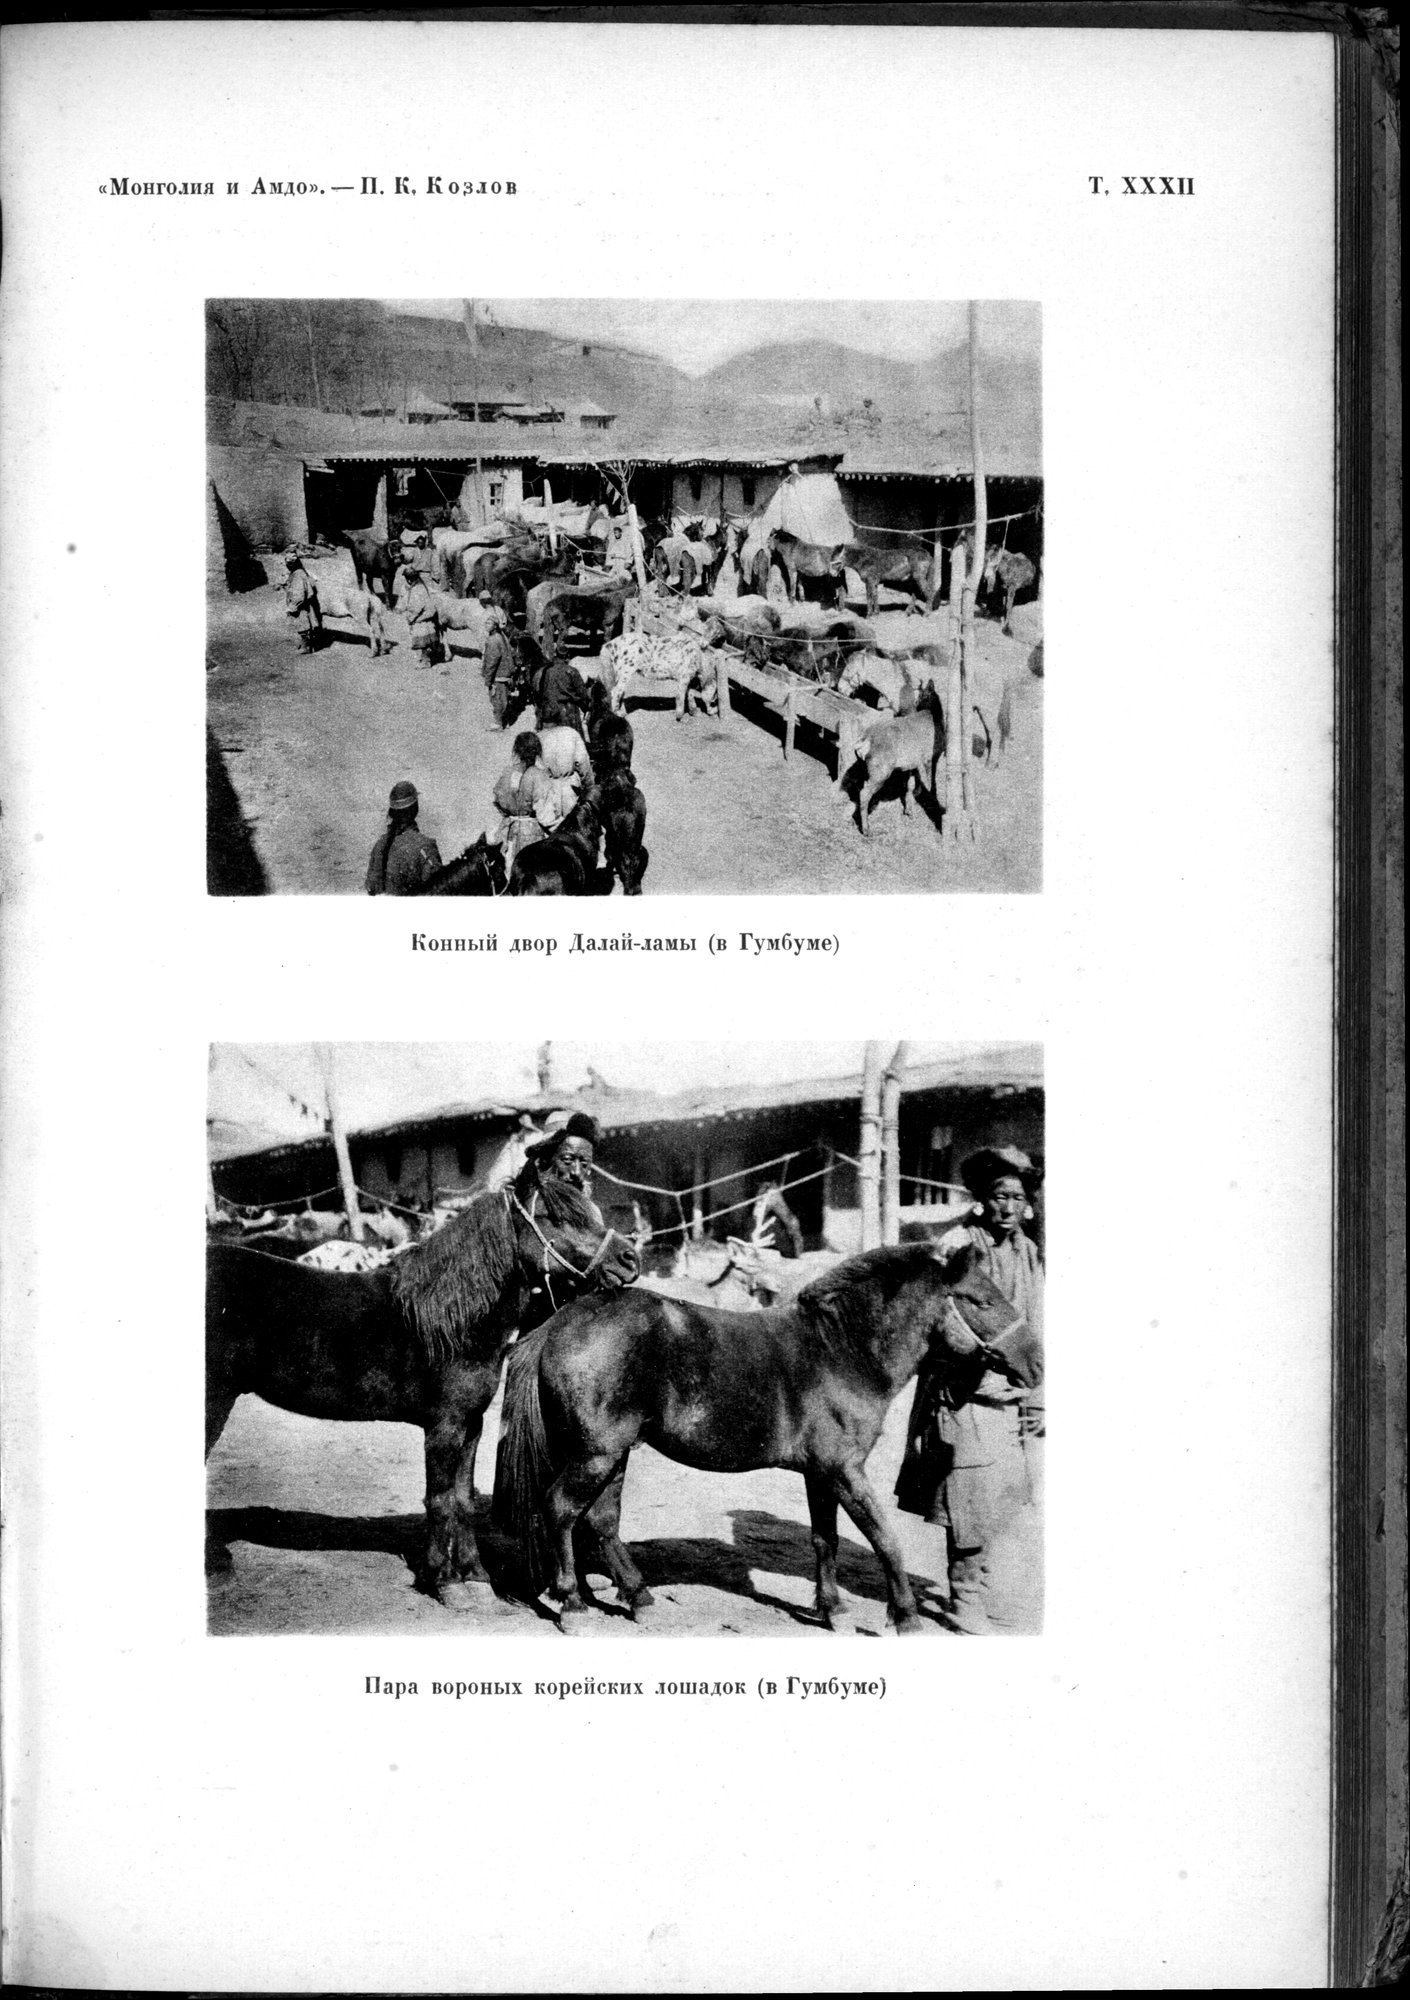 Mongoliya i Amdo i mertby gorod Khara-Khoto : vol.1 / Page 579 (Grayscale High Resolution Image)